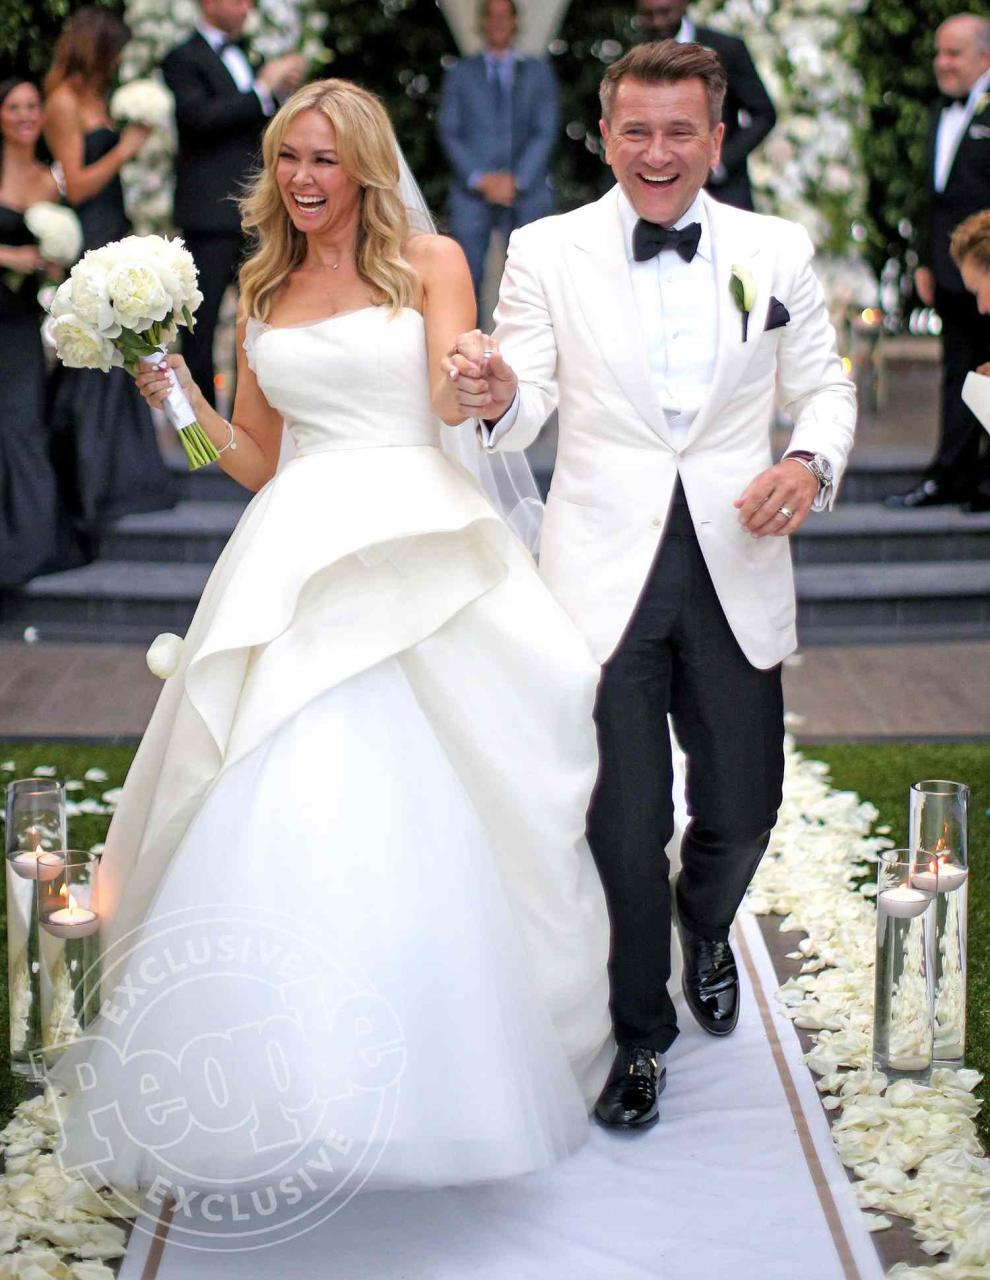 Kym Johnson and Robert Herjavec's Wedding Cake: Details and Photos |  PEOPLE.com